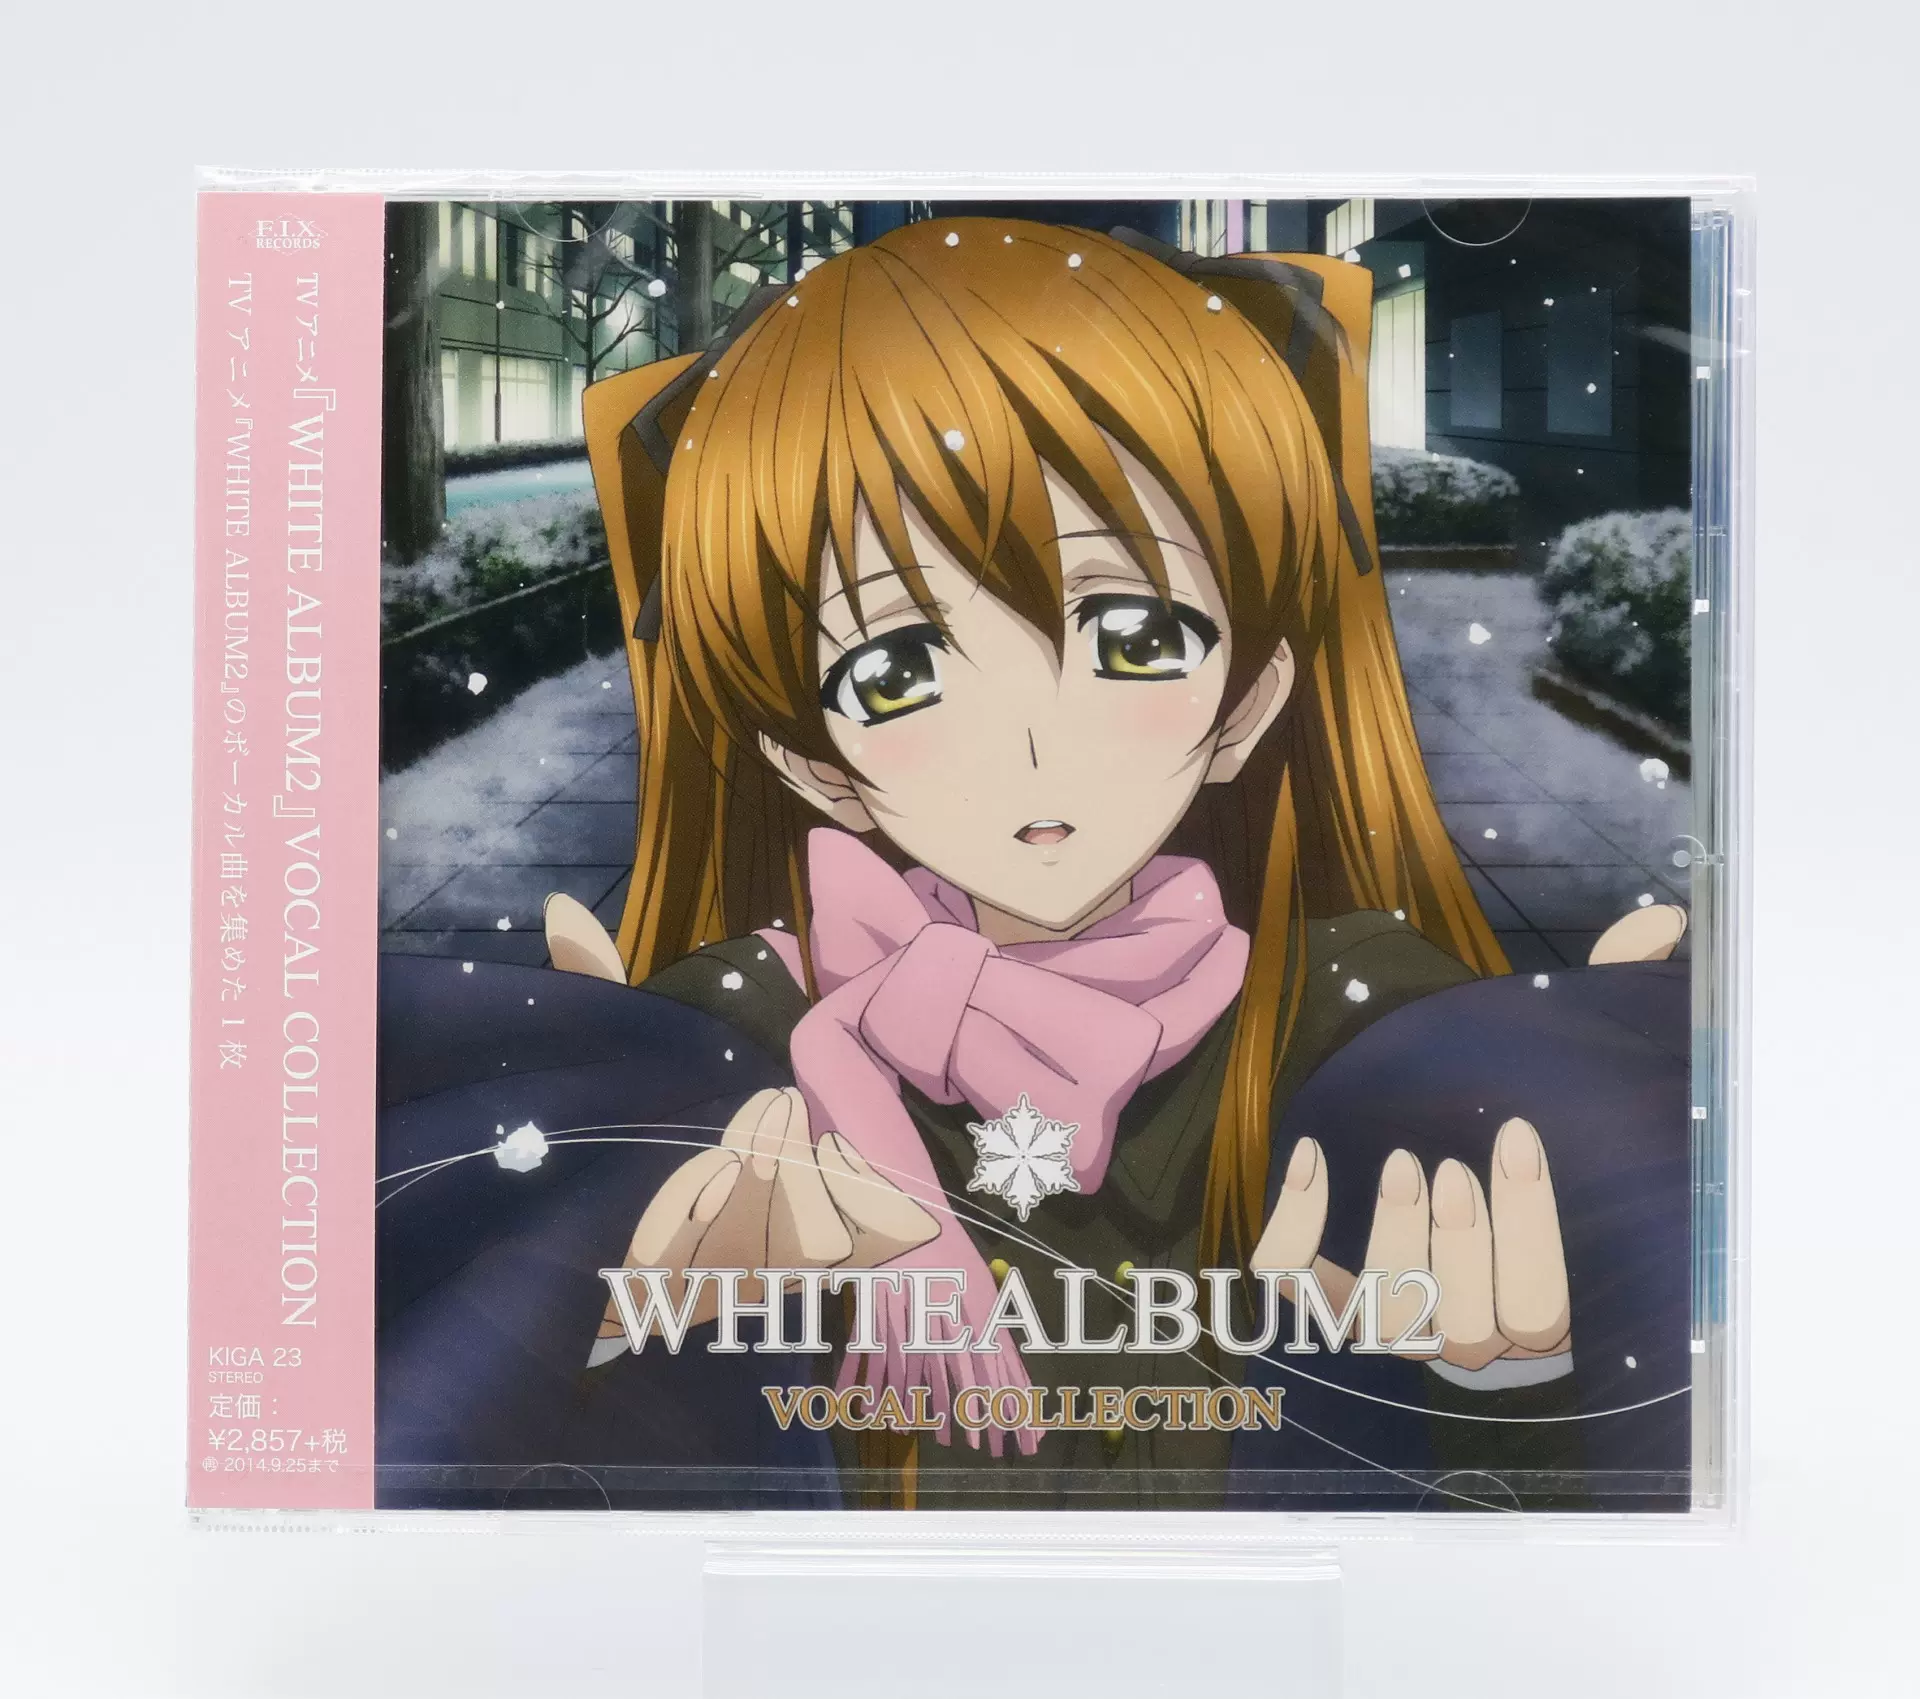 白色相簿2 WHITE ALBUM2 VOCAL COLLECTION 动漫歌曲集双层SACD-Taobao